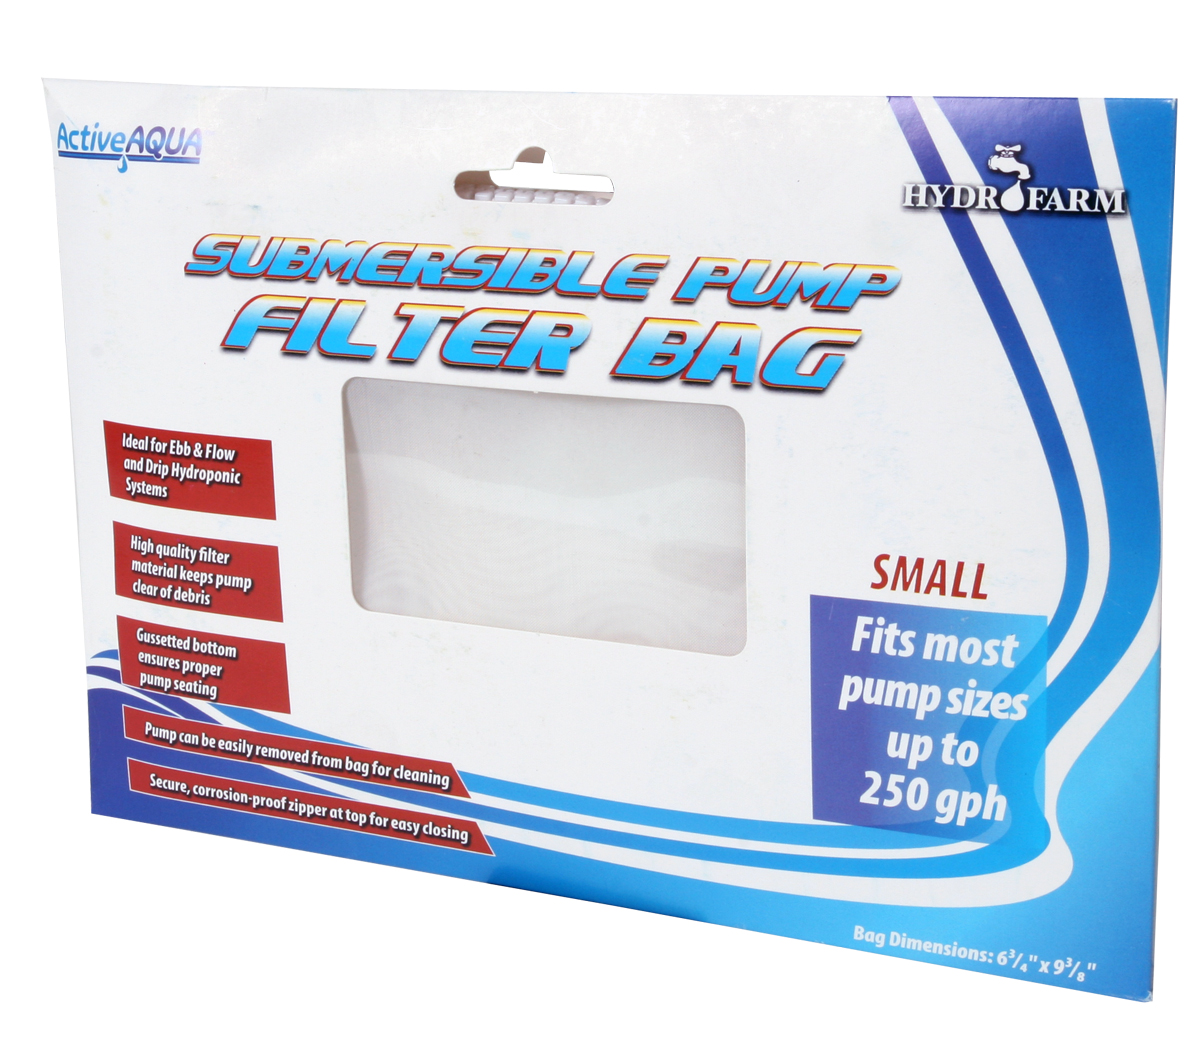 Picture for Active Aqua Submersible Pump Filter Bag, 6.75" x 9.375"